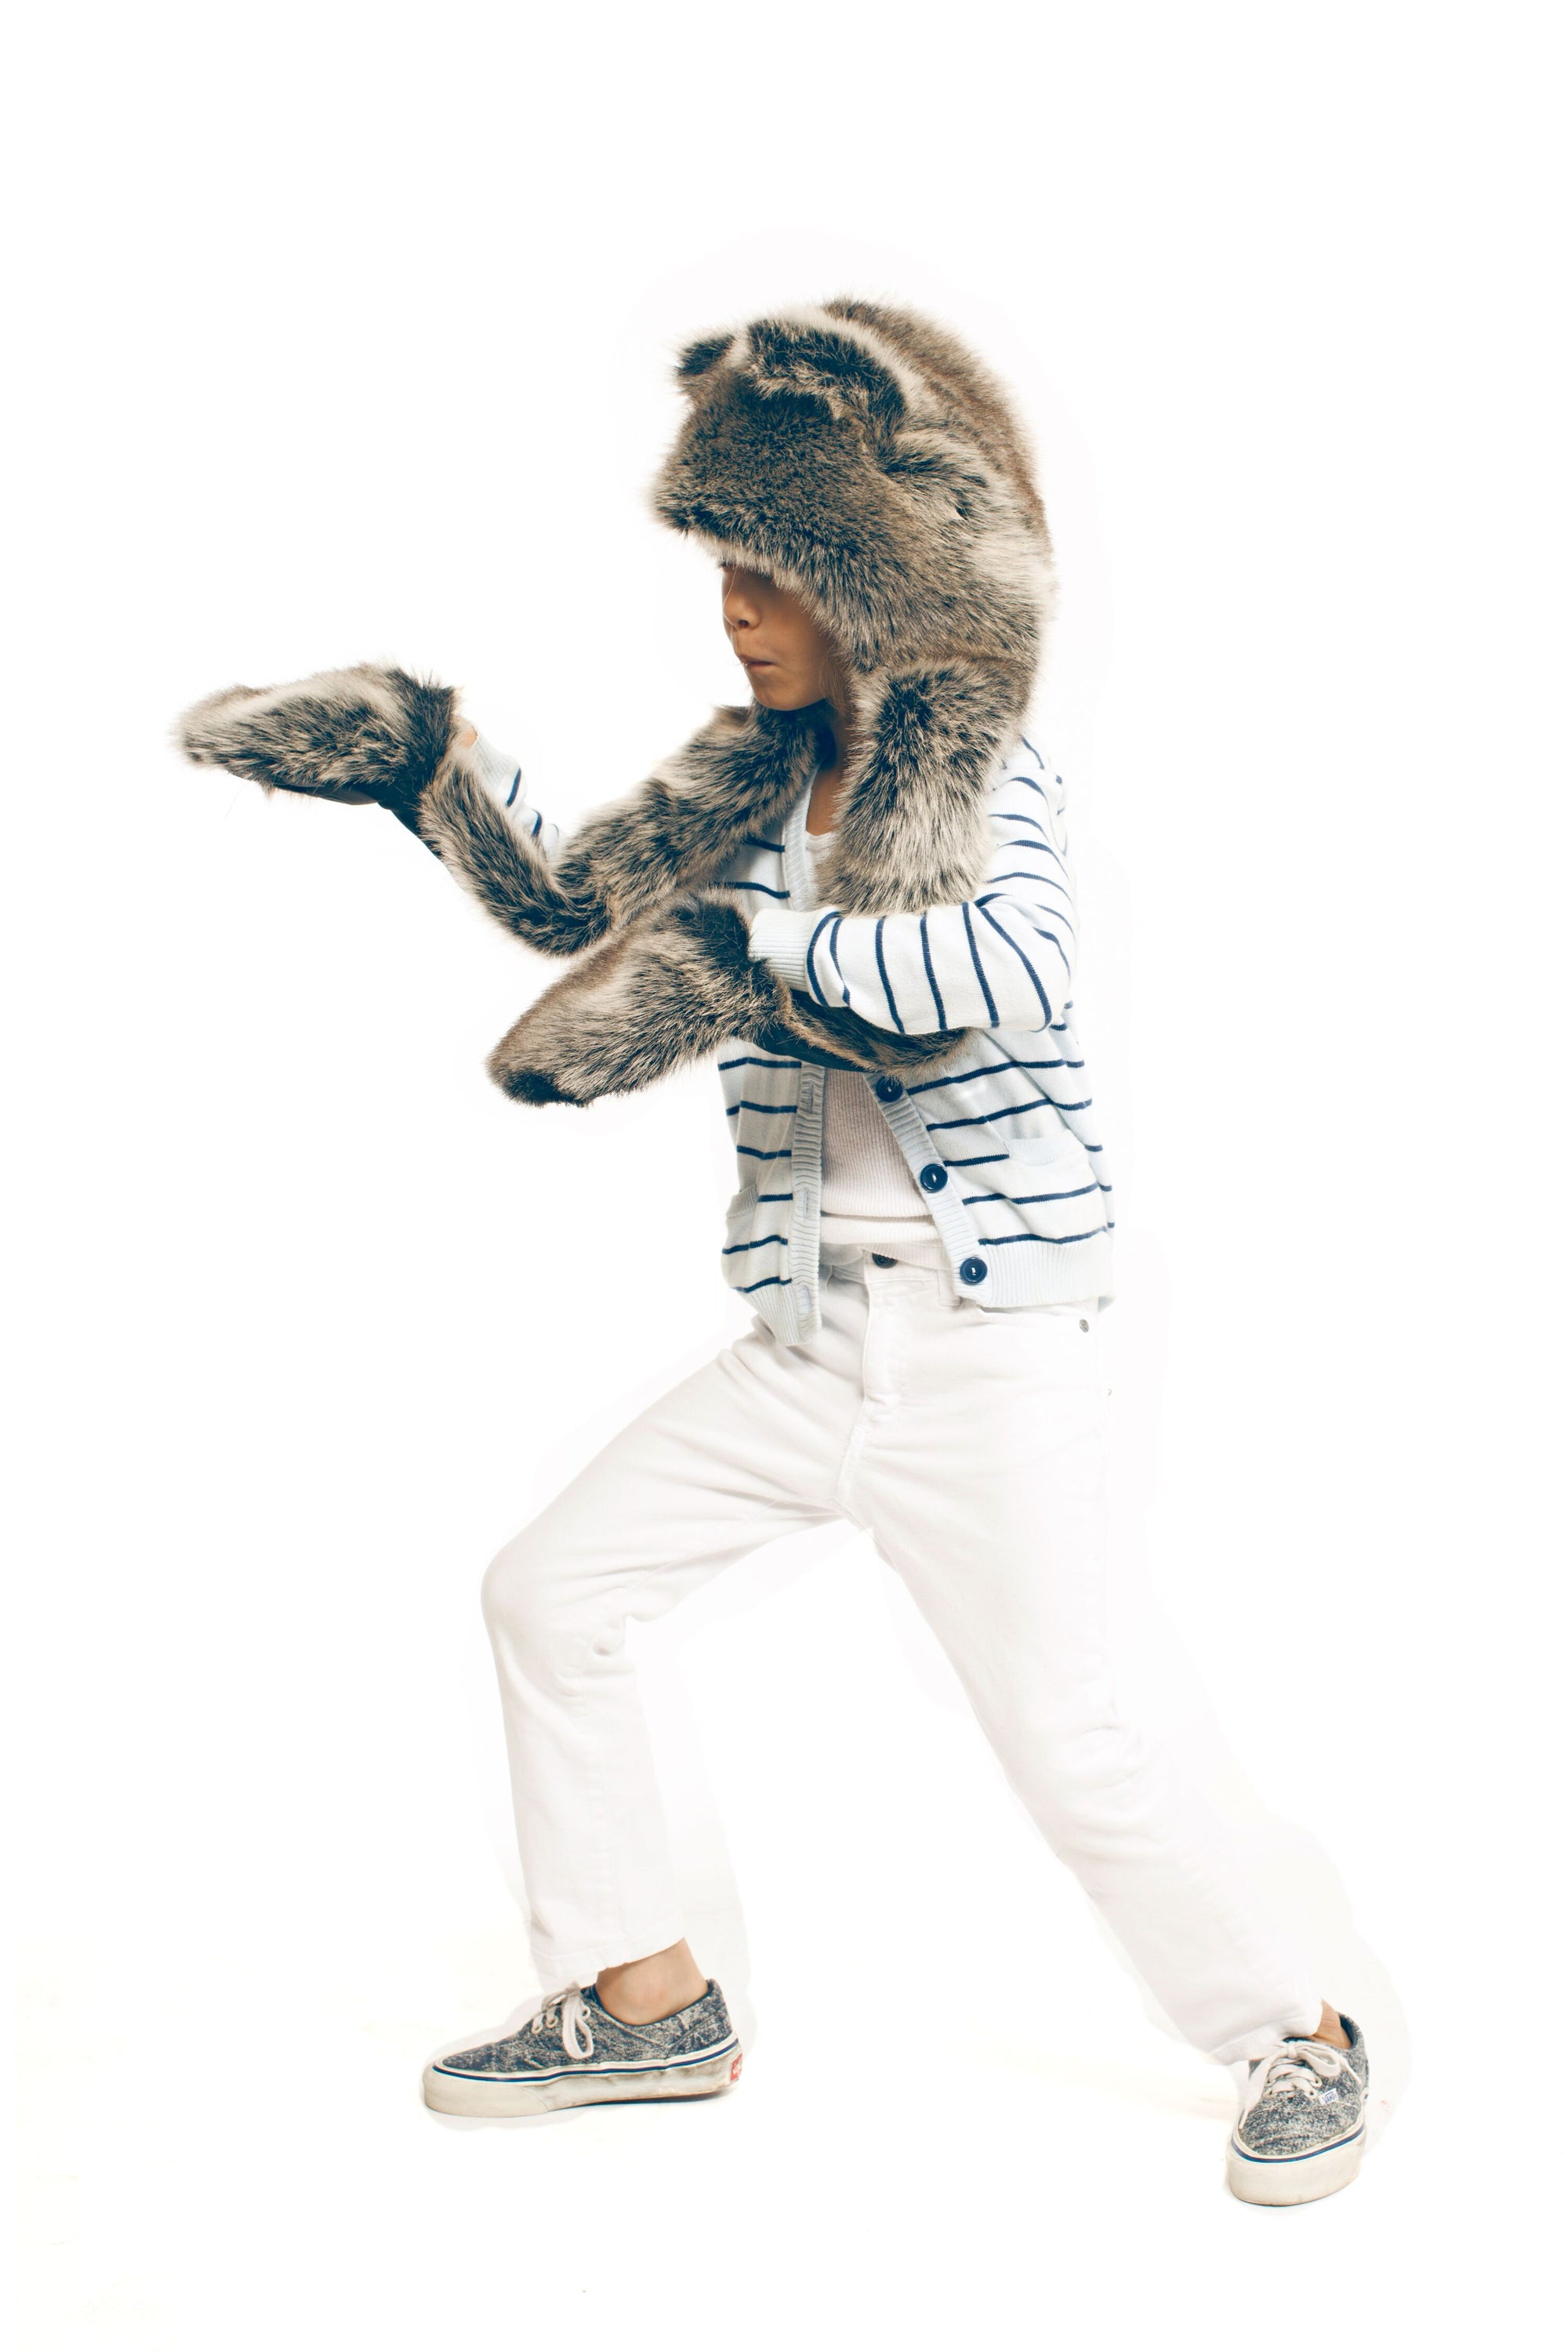 Kids Faux Fur SpiritHood in Grey Wolf Design on Girl